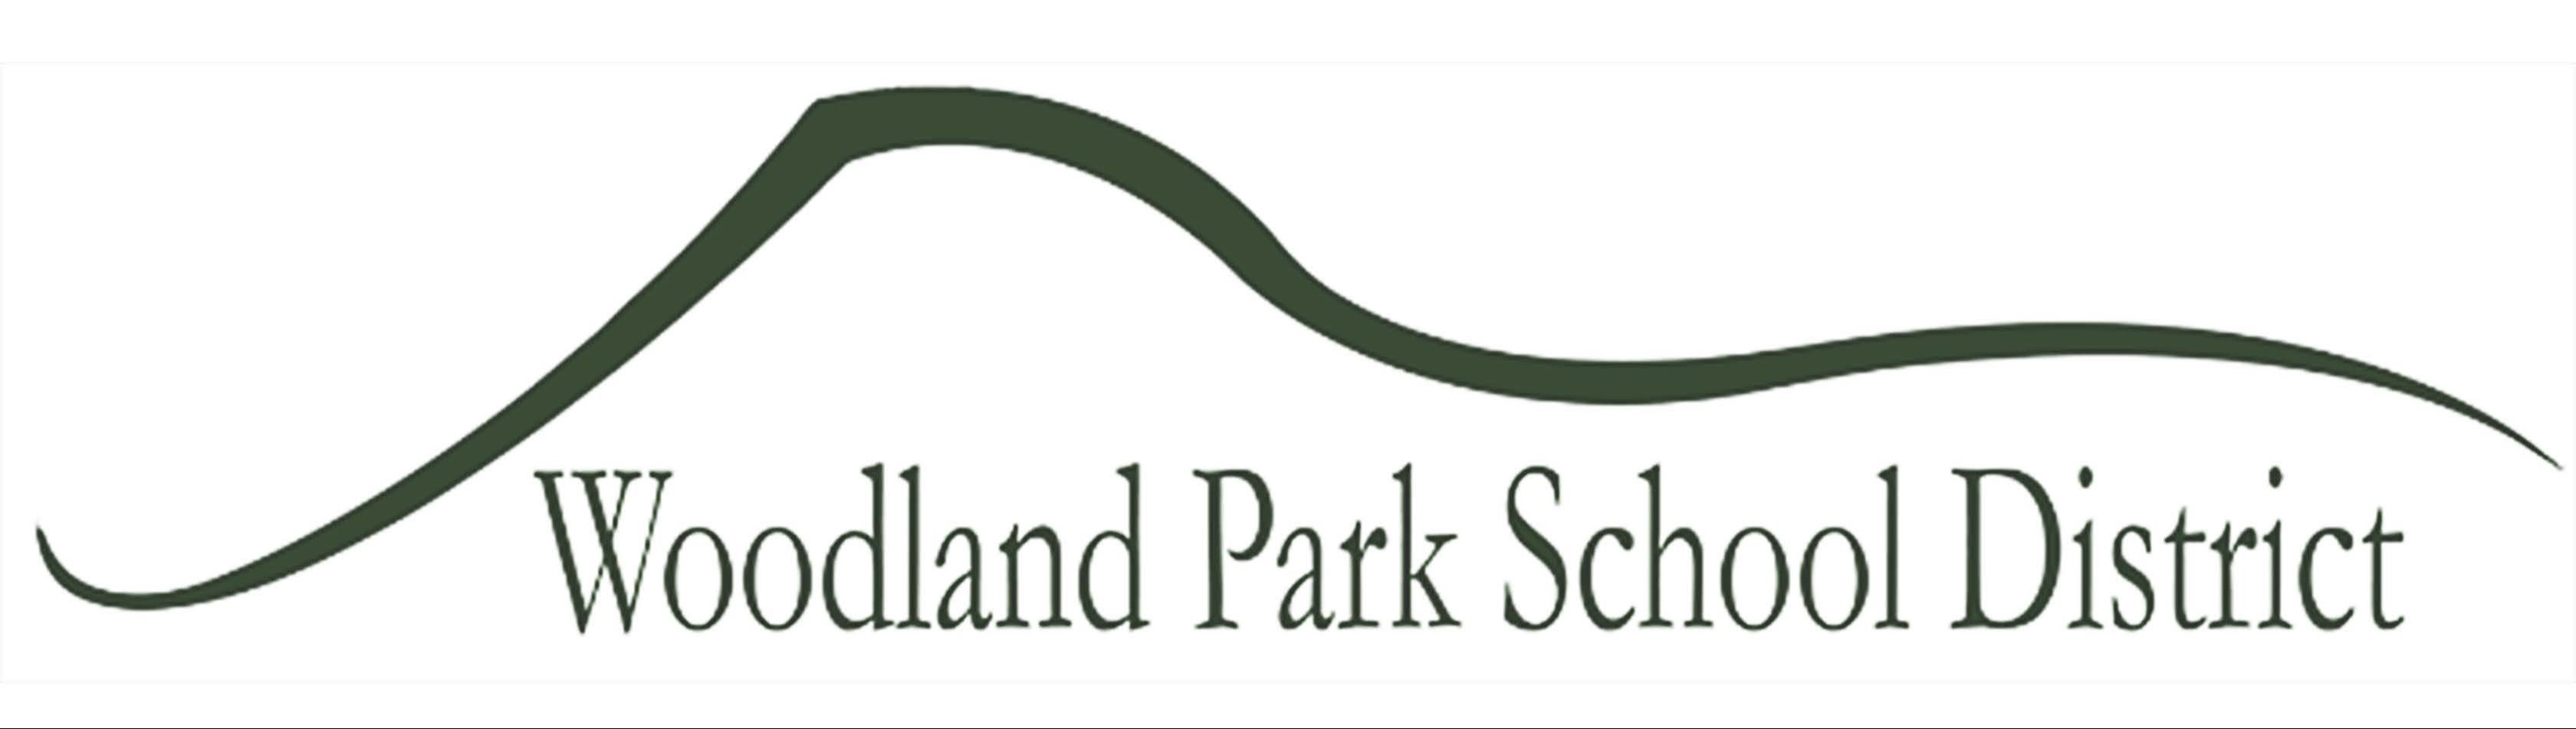 Woodland Park School District logo